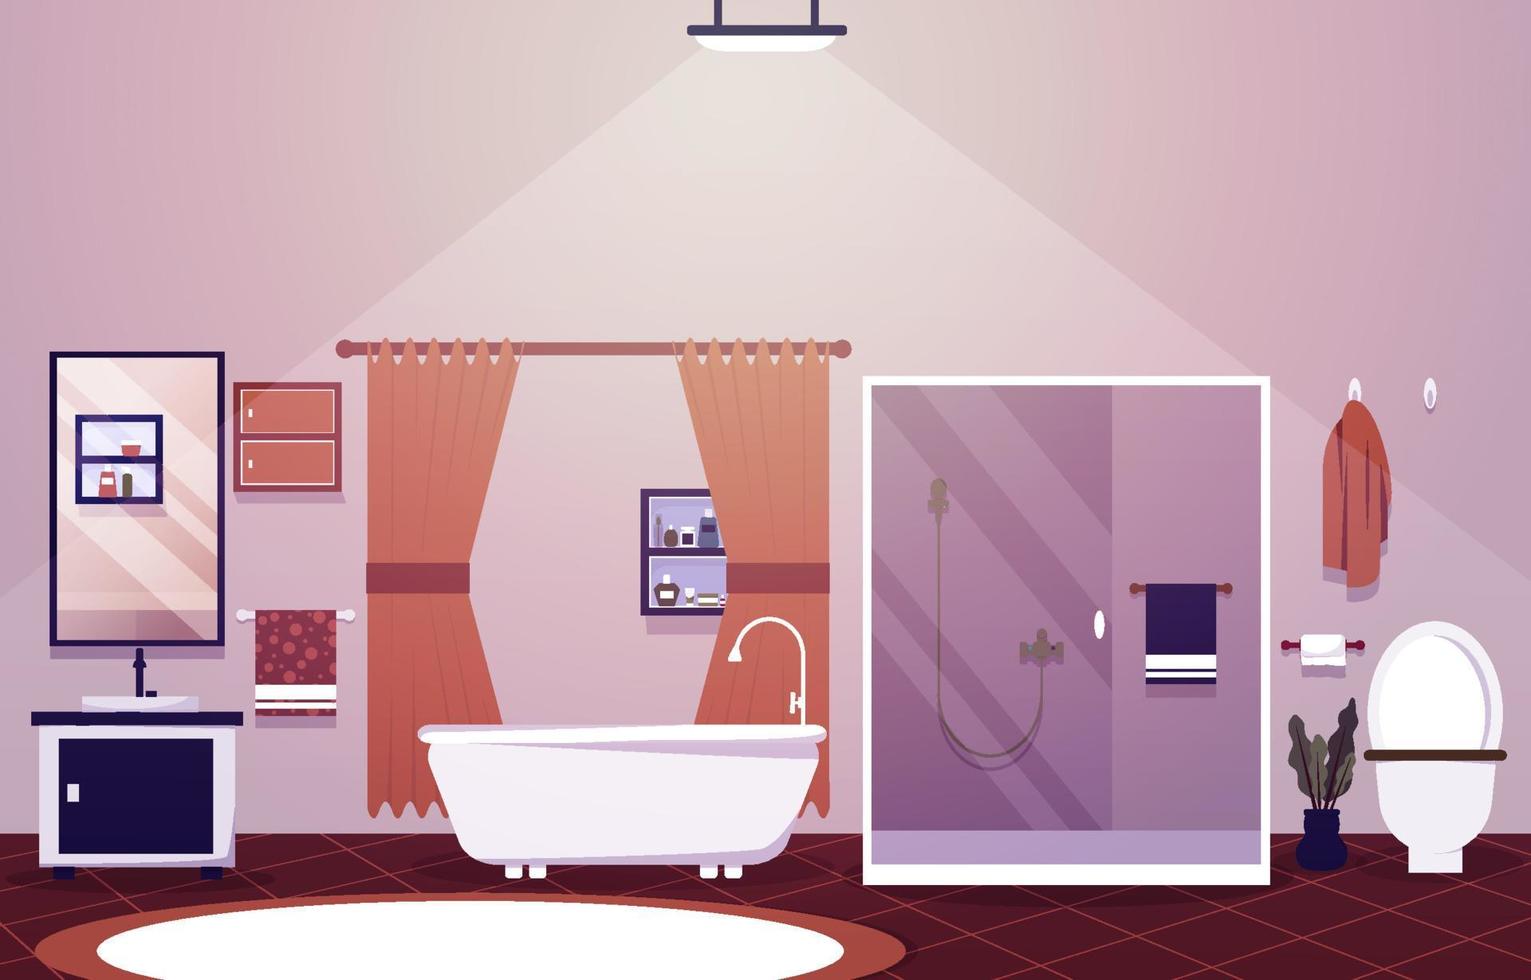 Clean Bathroom Interior Design Shower Bathtub Furniture Flat Illustration vector